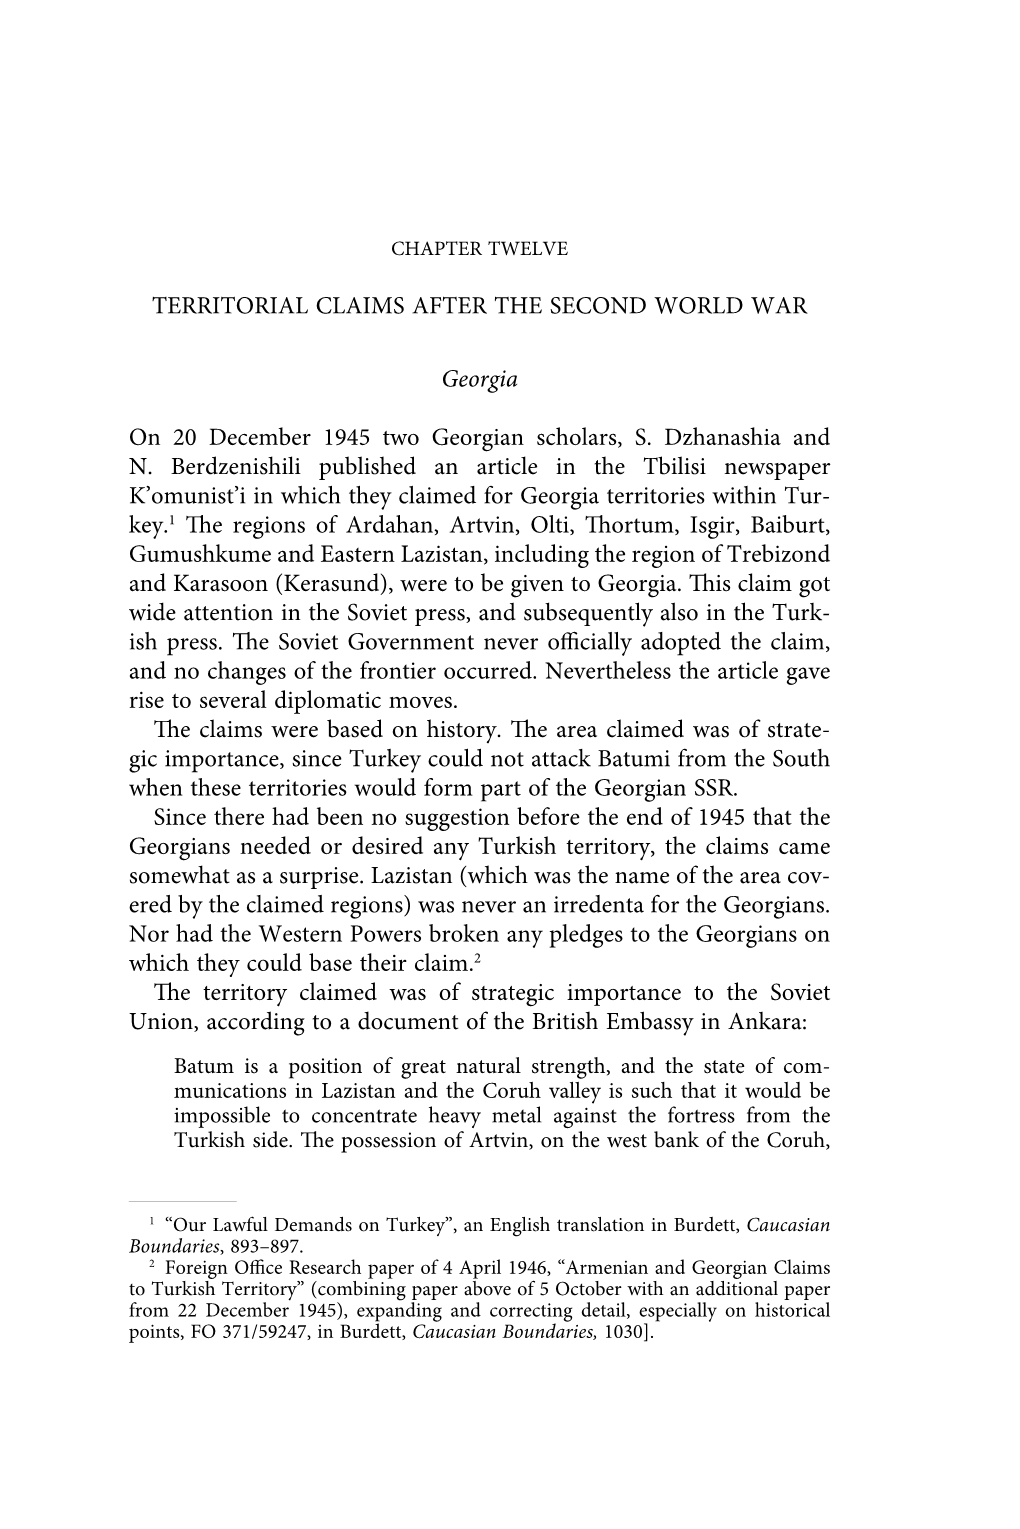 TERRITORIAL CLAIMS AFTER the SECOND WORLD WAR Georgia on 20 December 1945 Two Georgian Scholars, S. Dzhanashia and N. Berdzenish